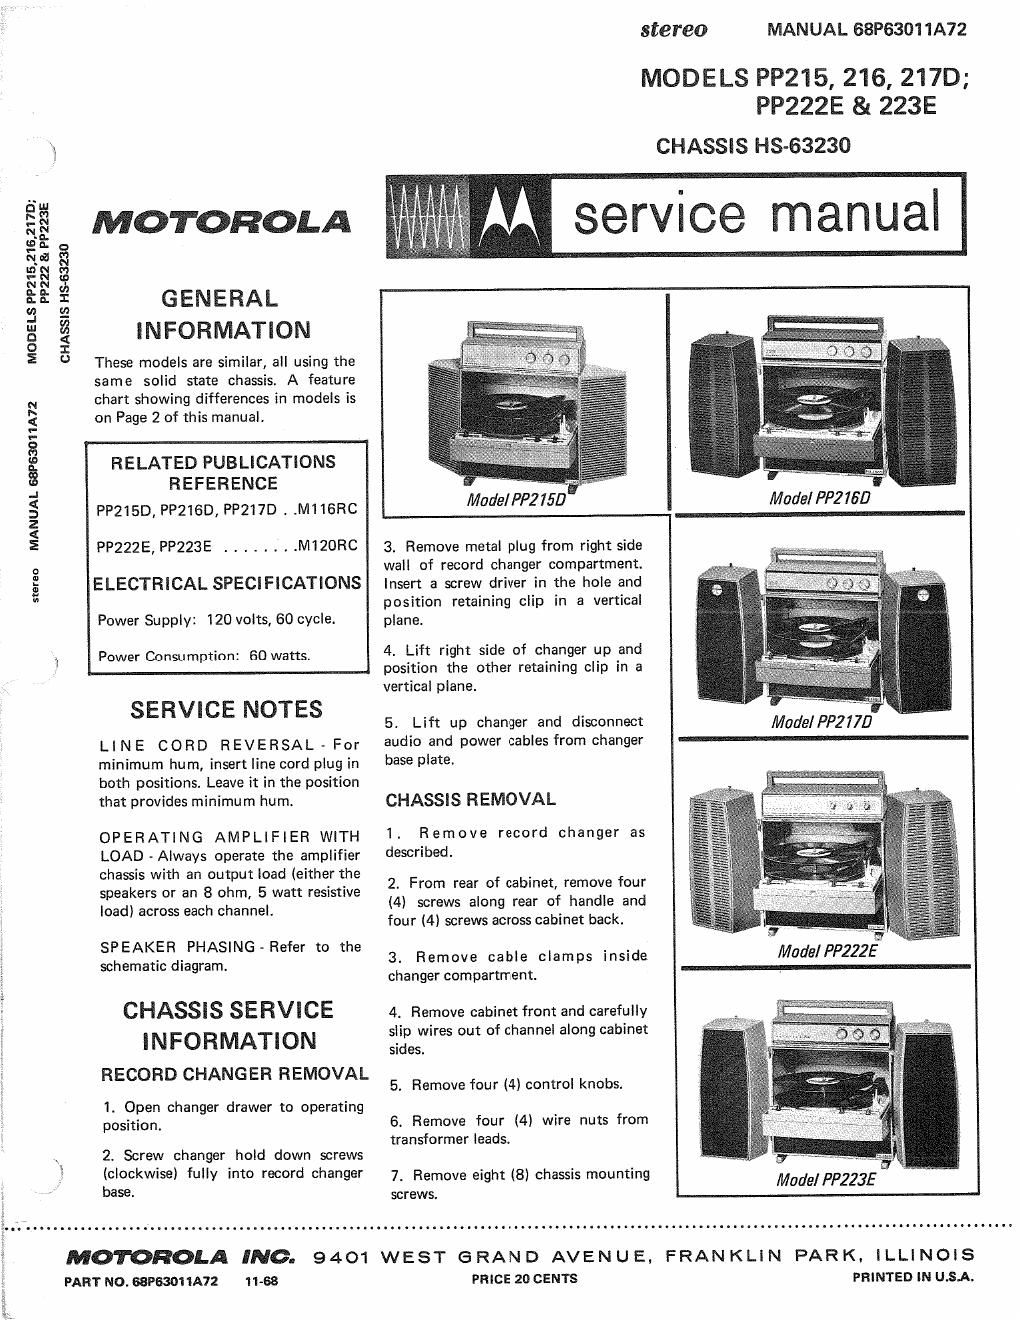 motorola pp 217 d service manual